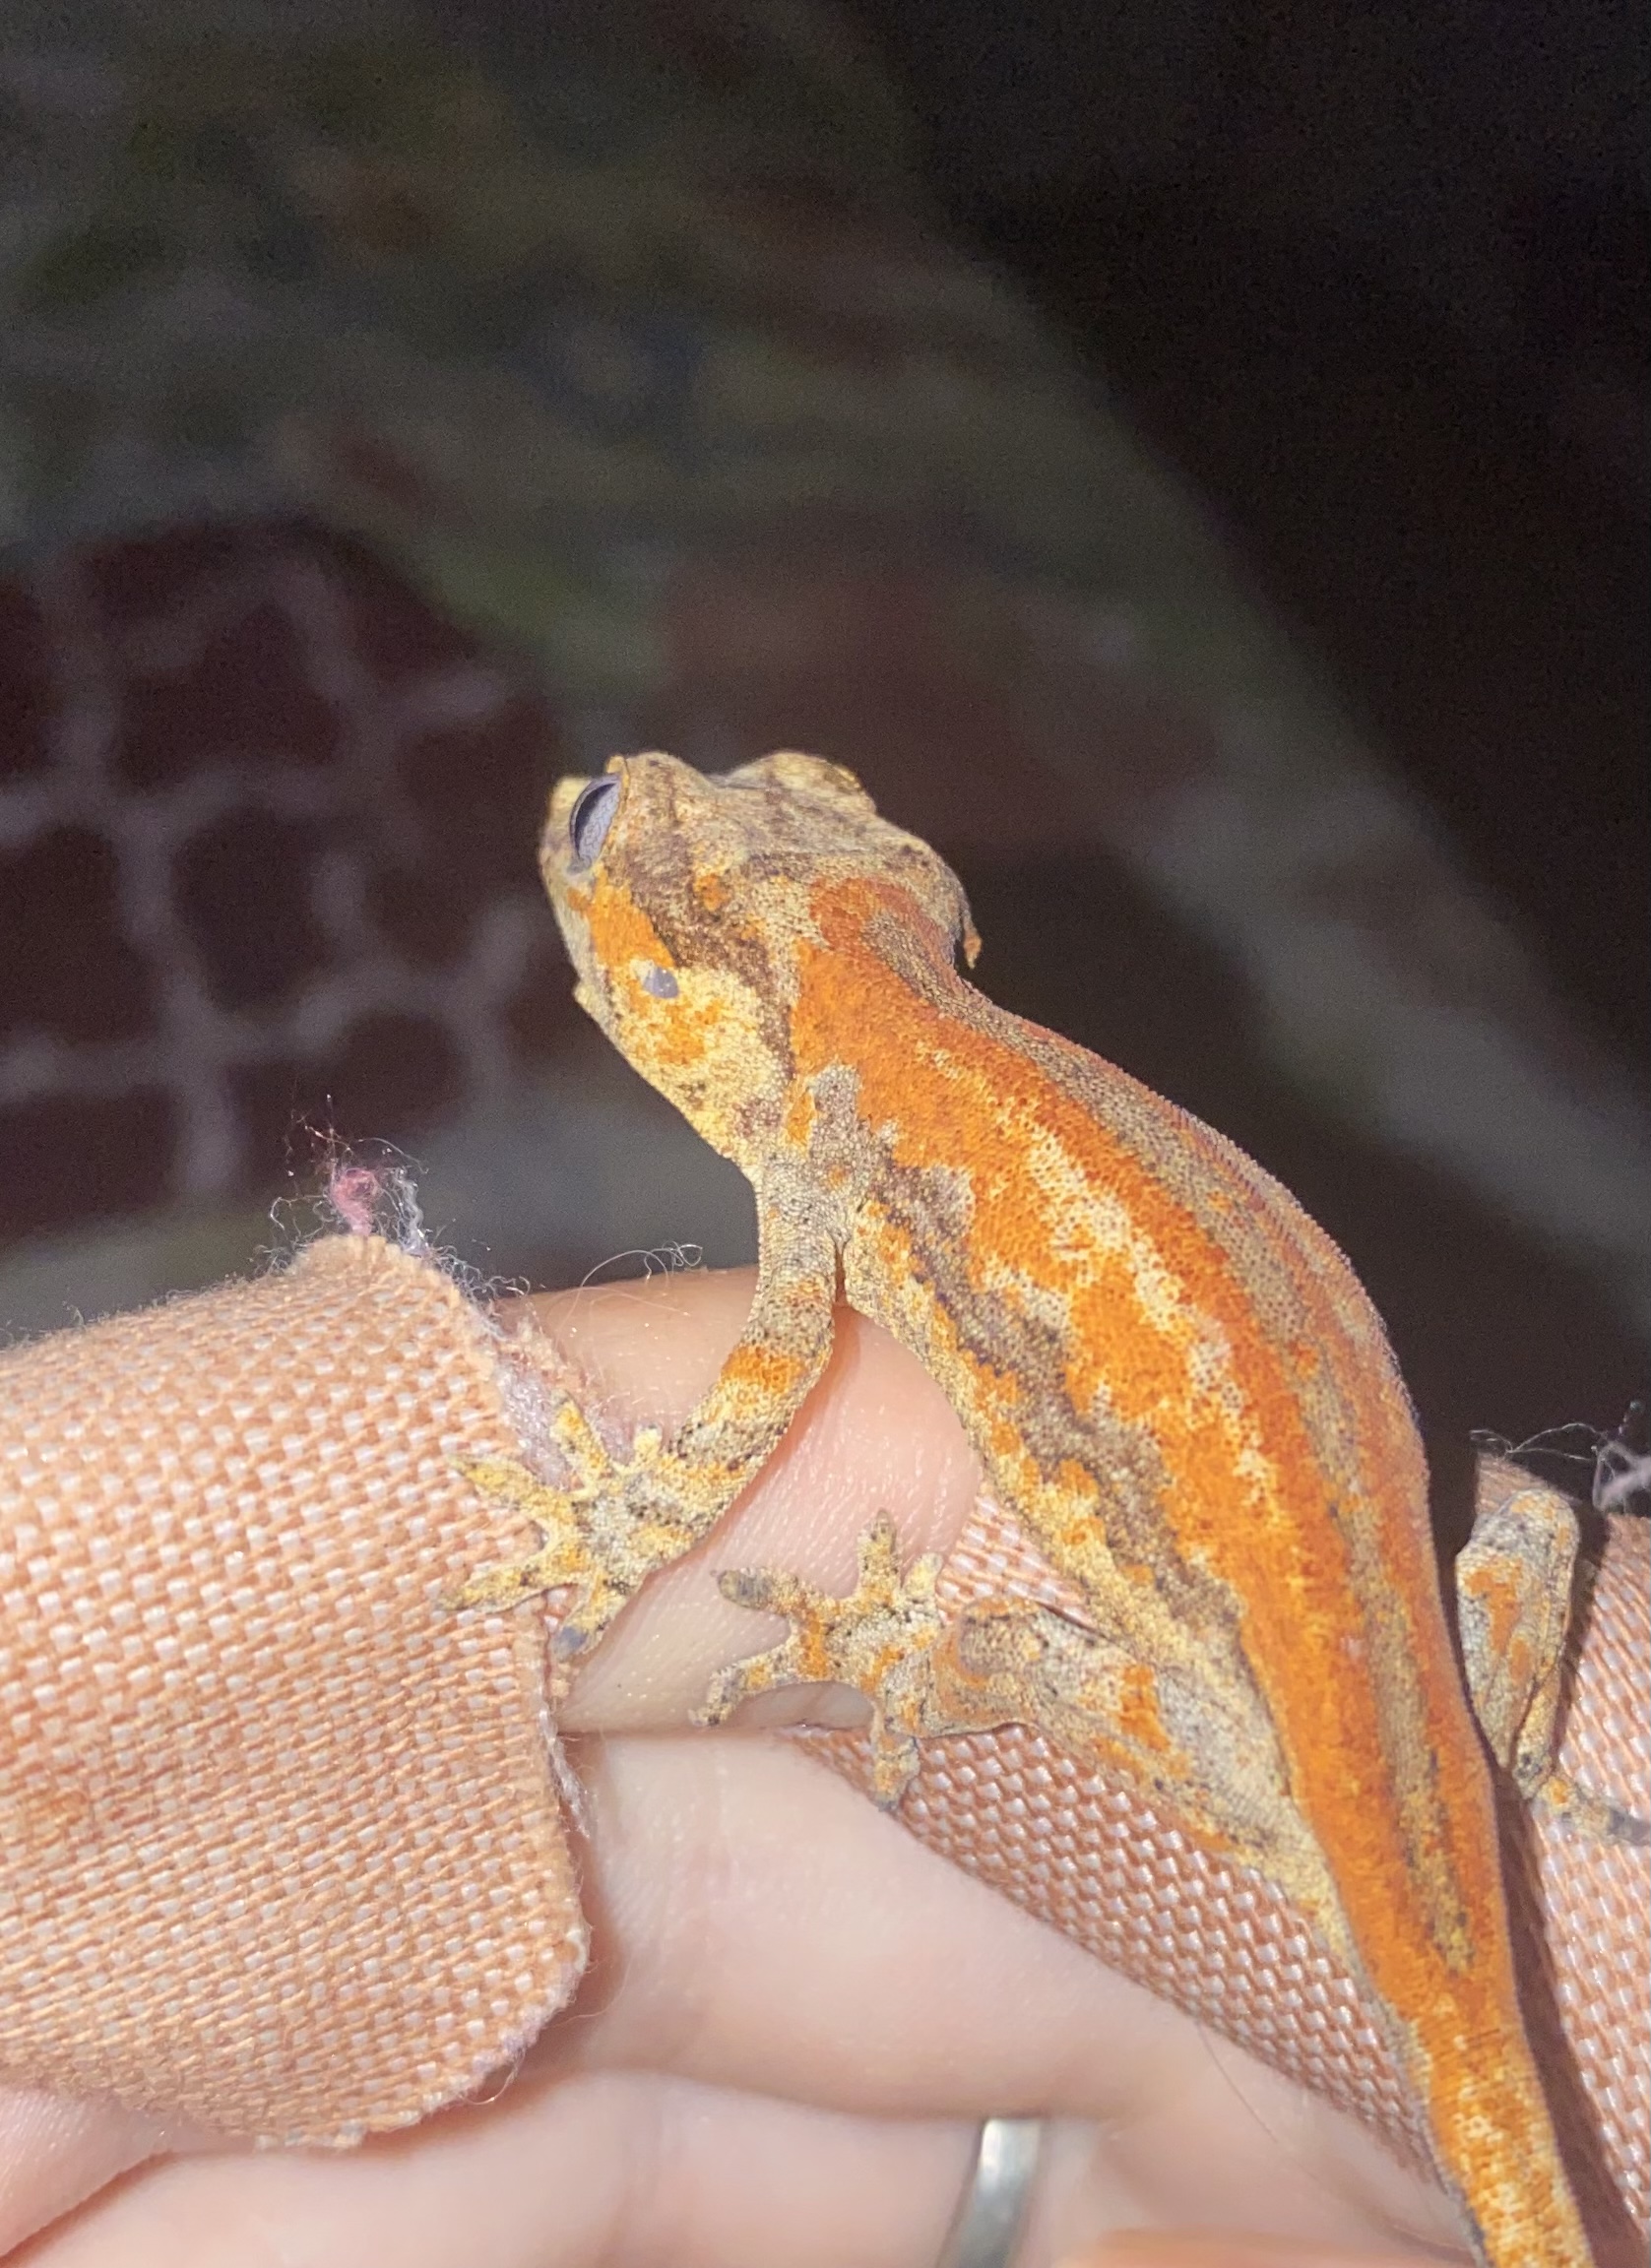 Therin, baby gargoyle gecko